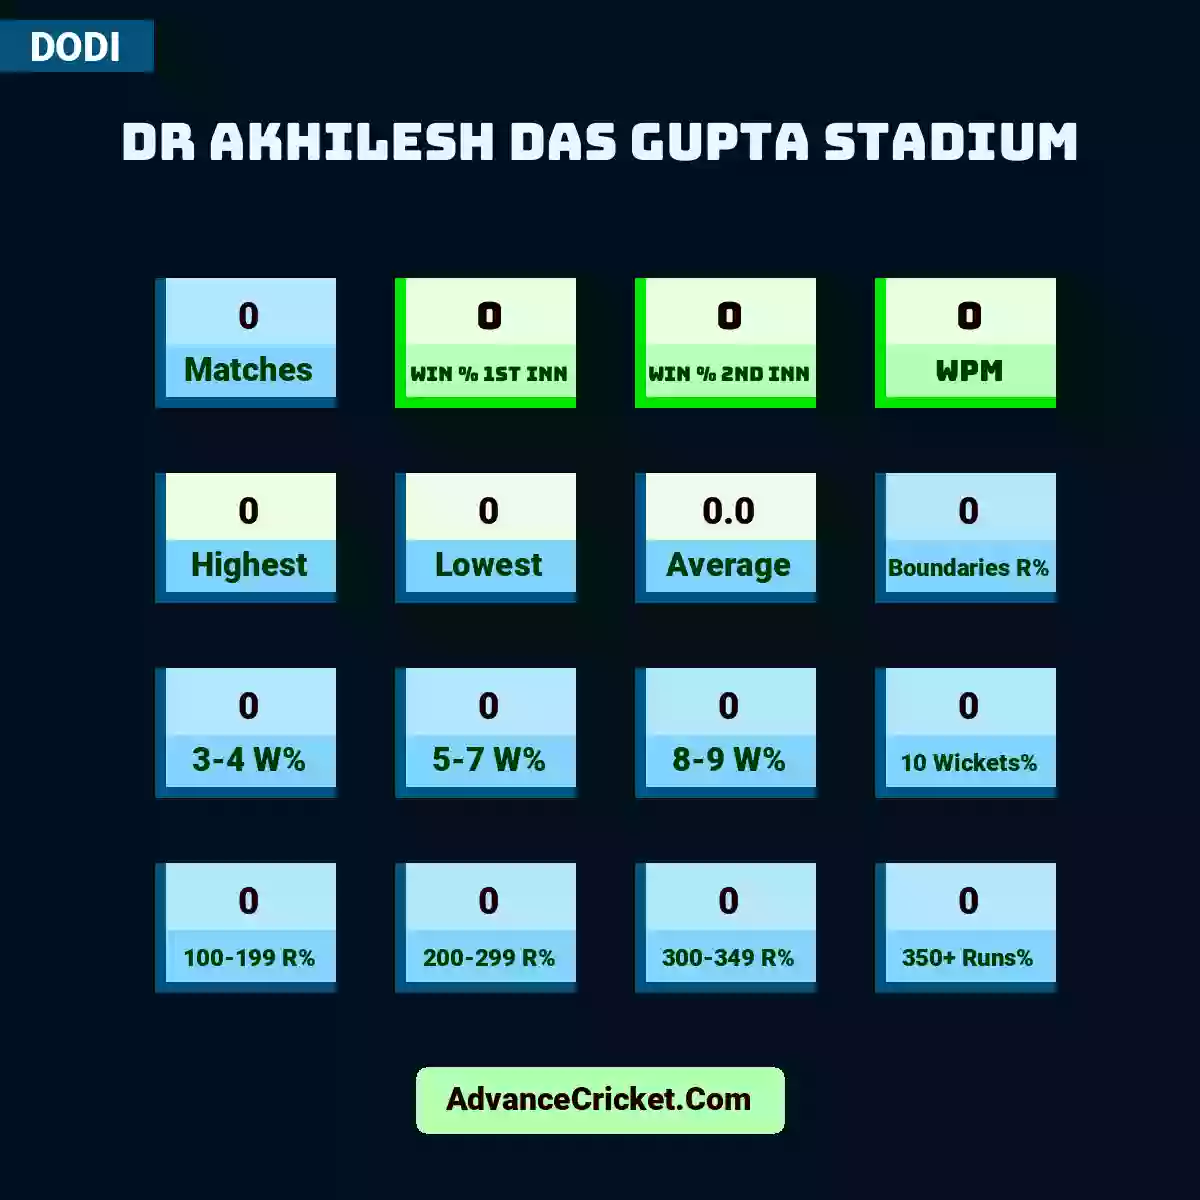 Image showing Dr Akhilesh Das Gupta Stadium with Matches: 0, Win % 1st Inn: 0, Win % 2nd Inn: 0, WPM: 0, Highest: 0, Lowest: 0, Average: 0.0, Boundaries R%: 0, 3-4 W%: 0, 5-7 W%: 0, 8-9 W%: 0, 10 Wickets%: 0, 100-199 R%: 0, 200-299 R%: 0, 300-349 R%: 0, 350+ Runs%: 0.